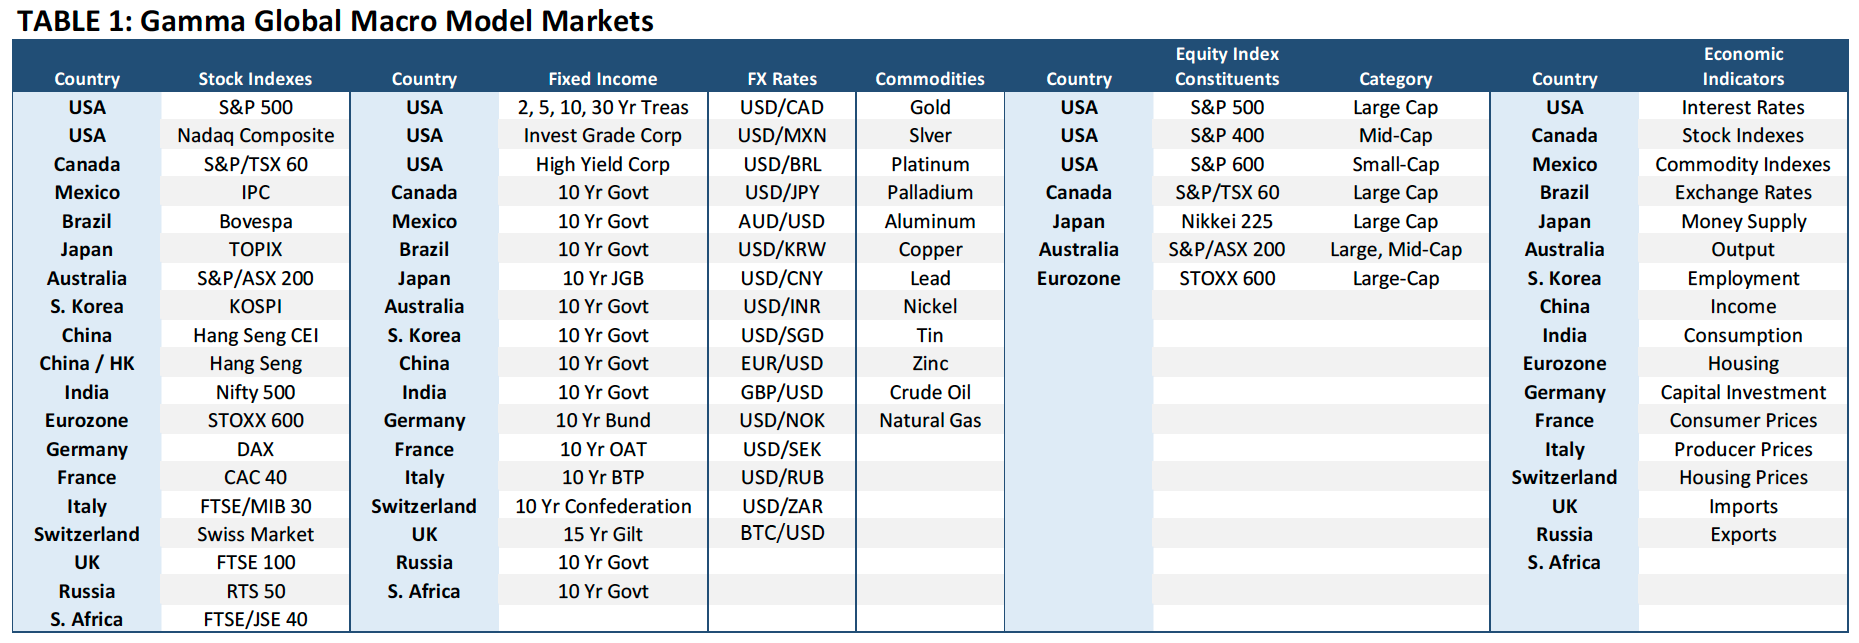 TABLE 1: Gamma Global Macro Model Markets